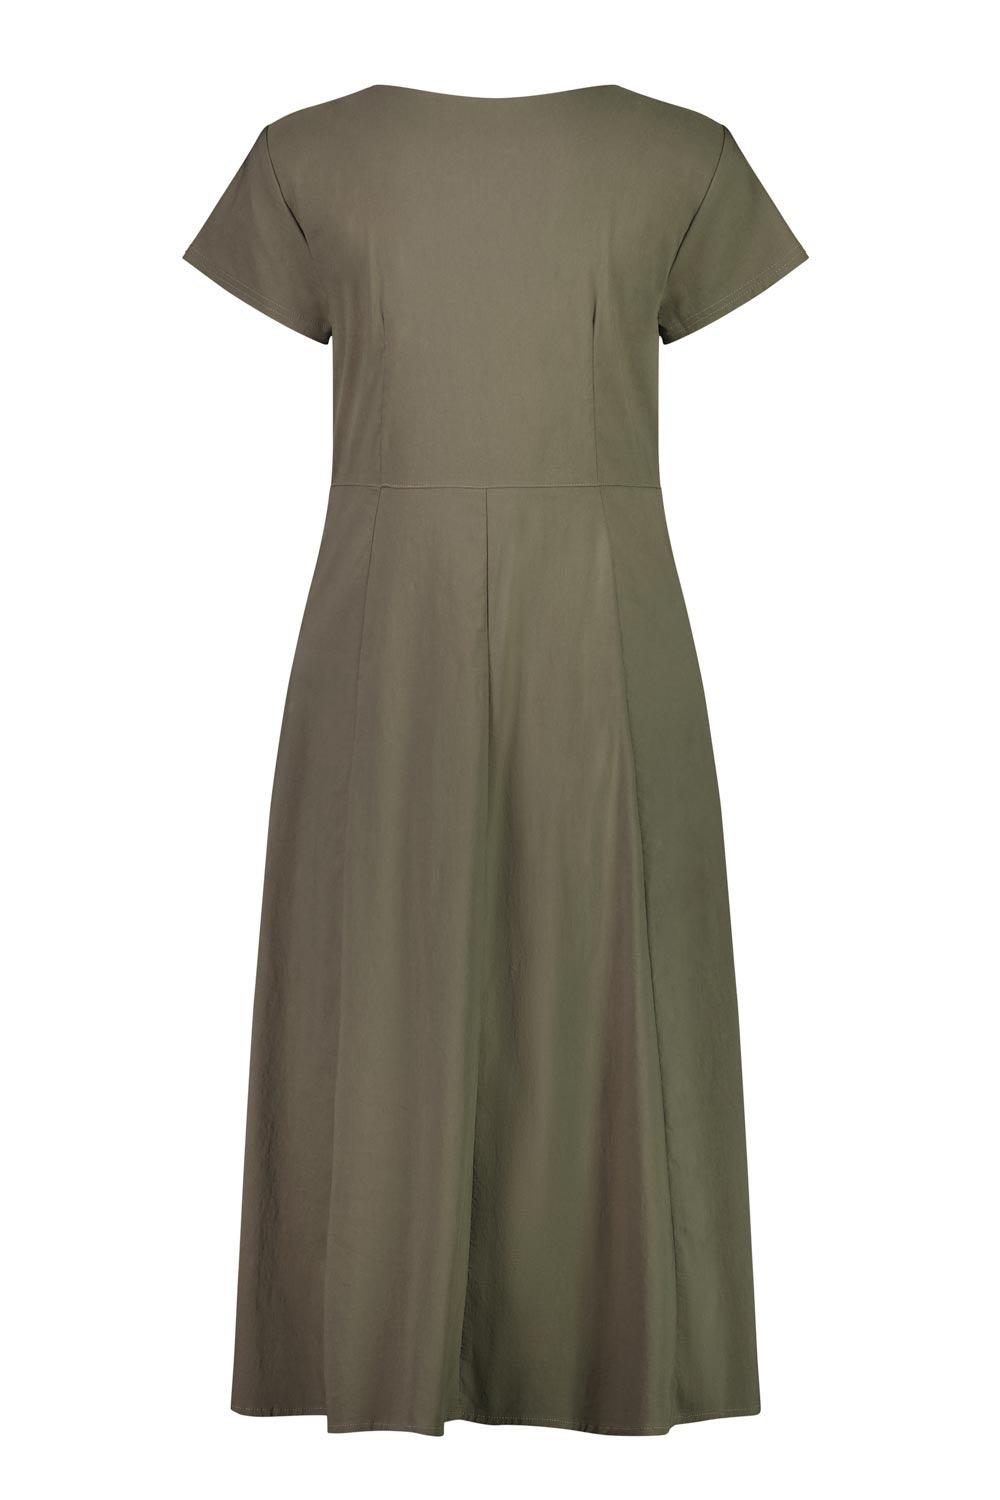 Acrobat Boost Dress - Safari - Dress VERGE